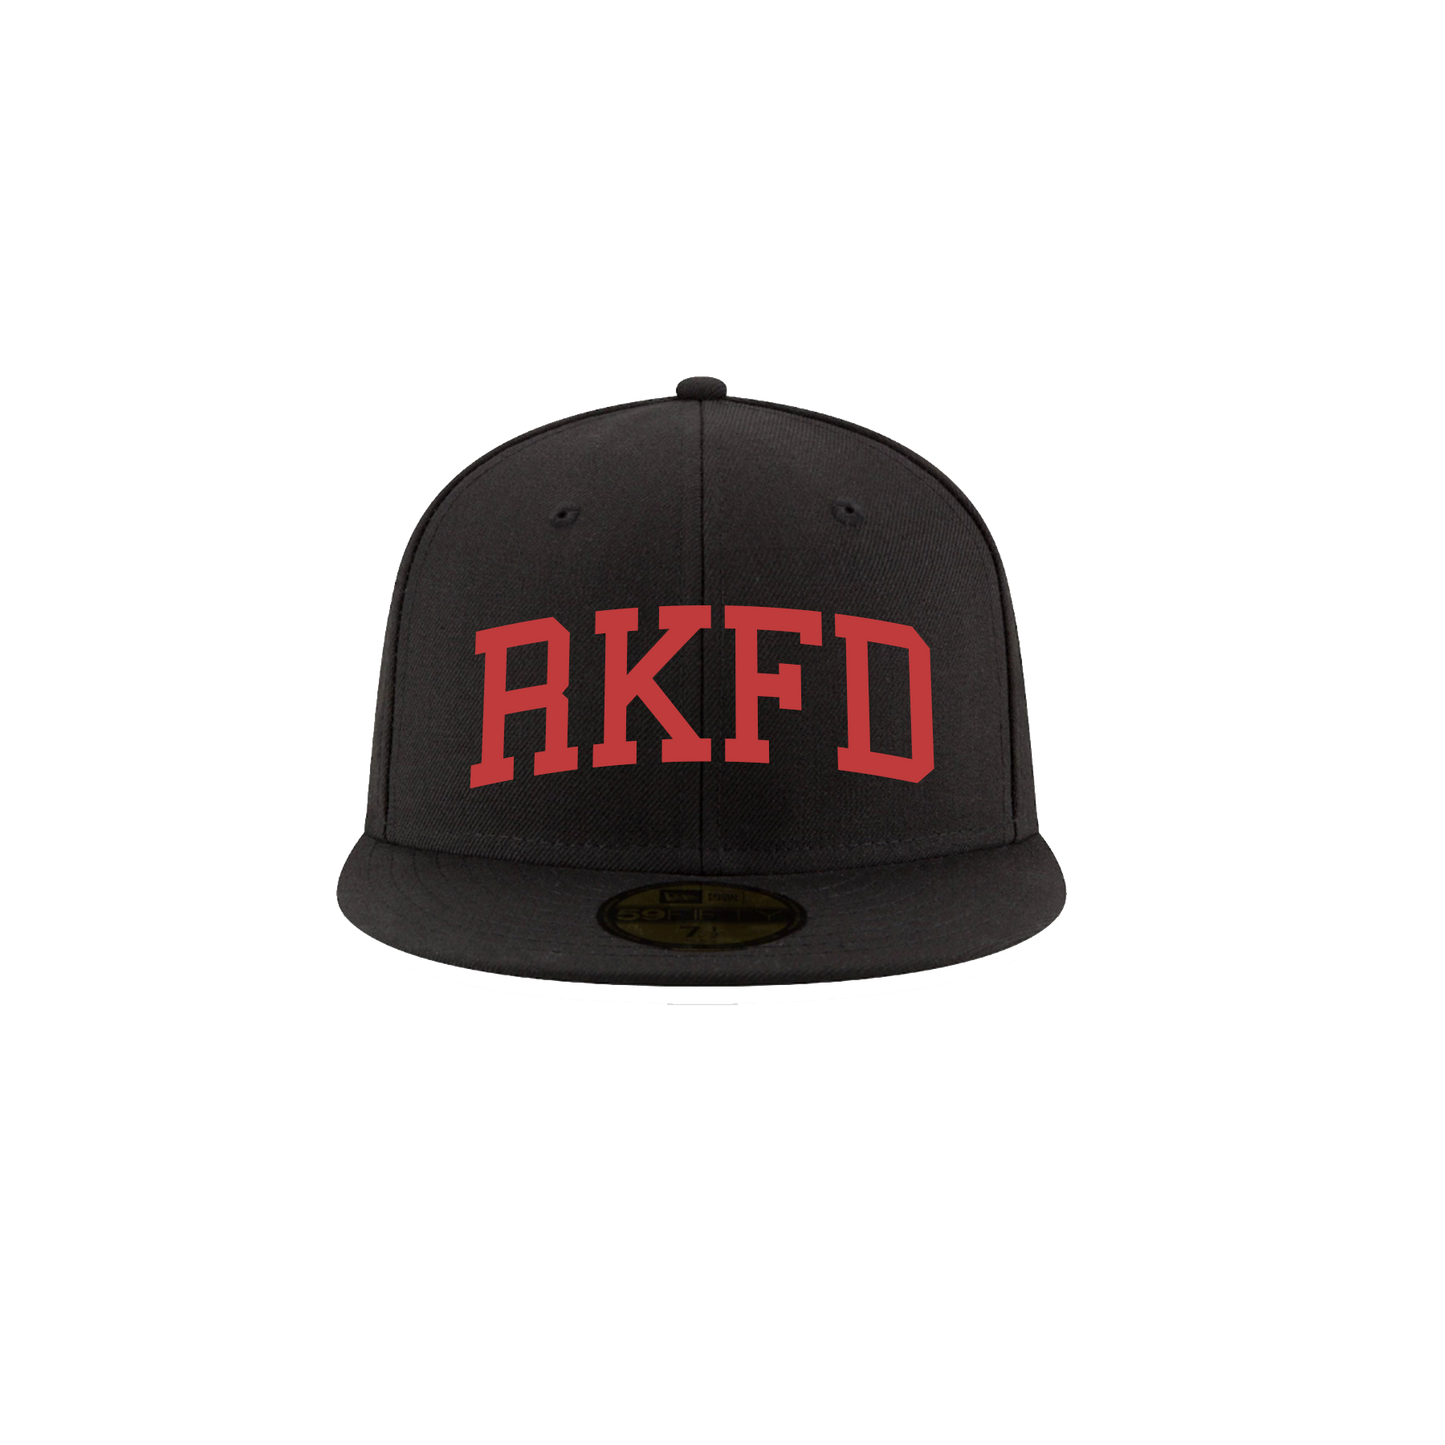 RKFD New Era Fitted (Black)